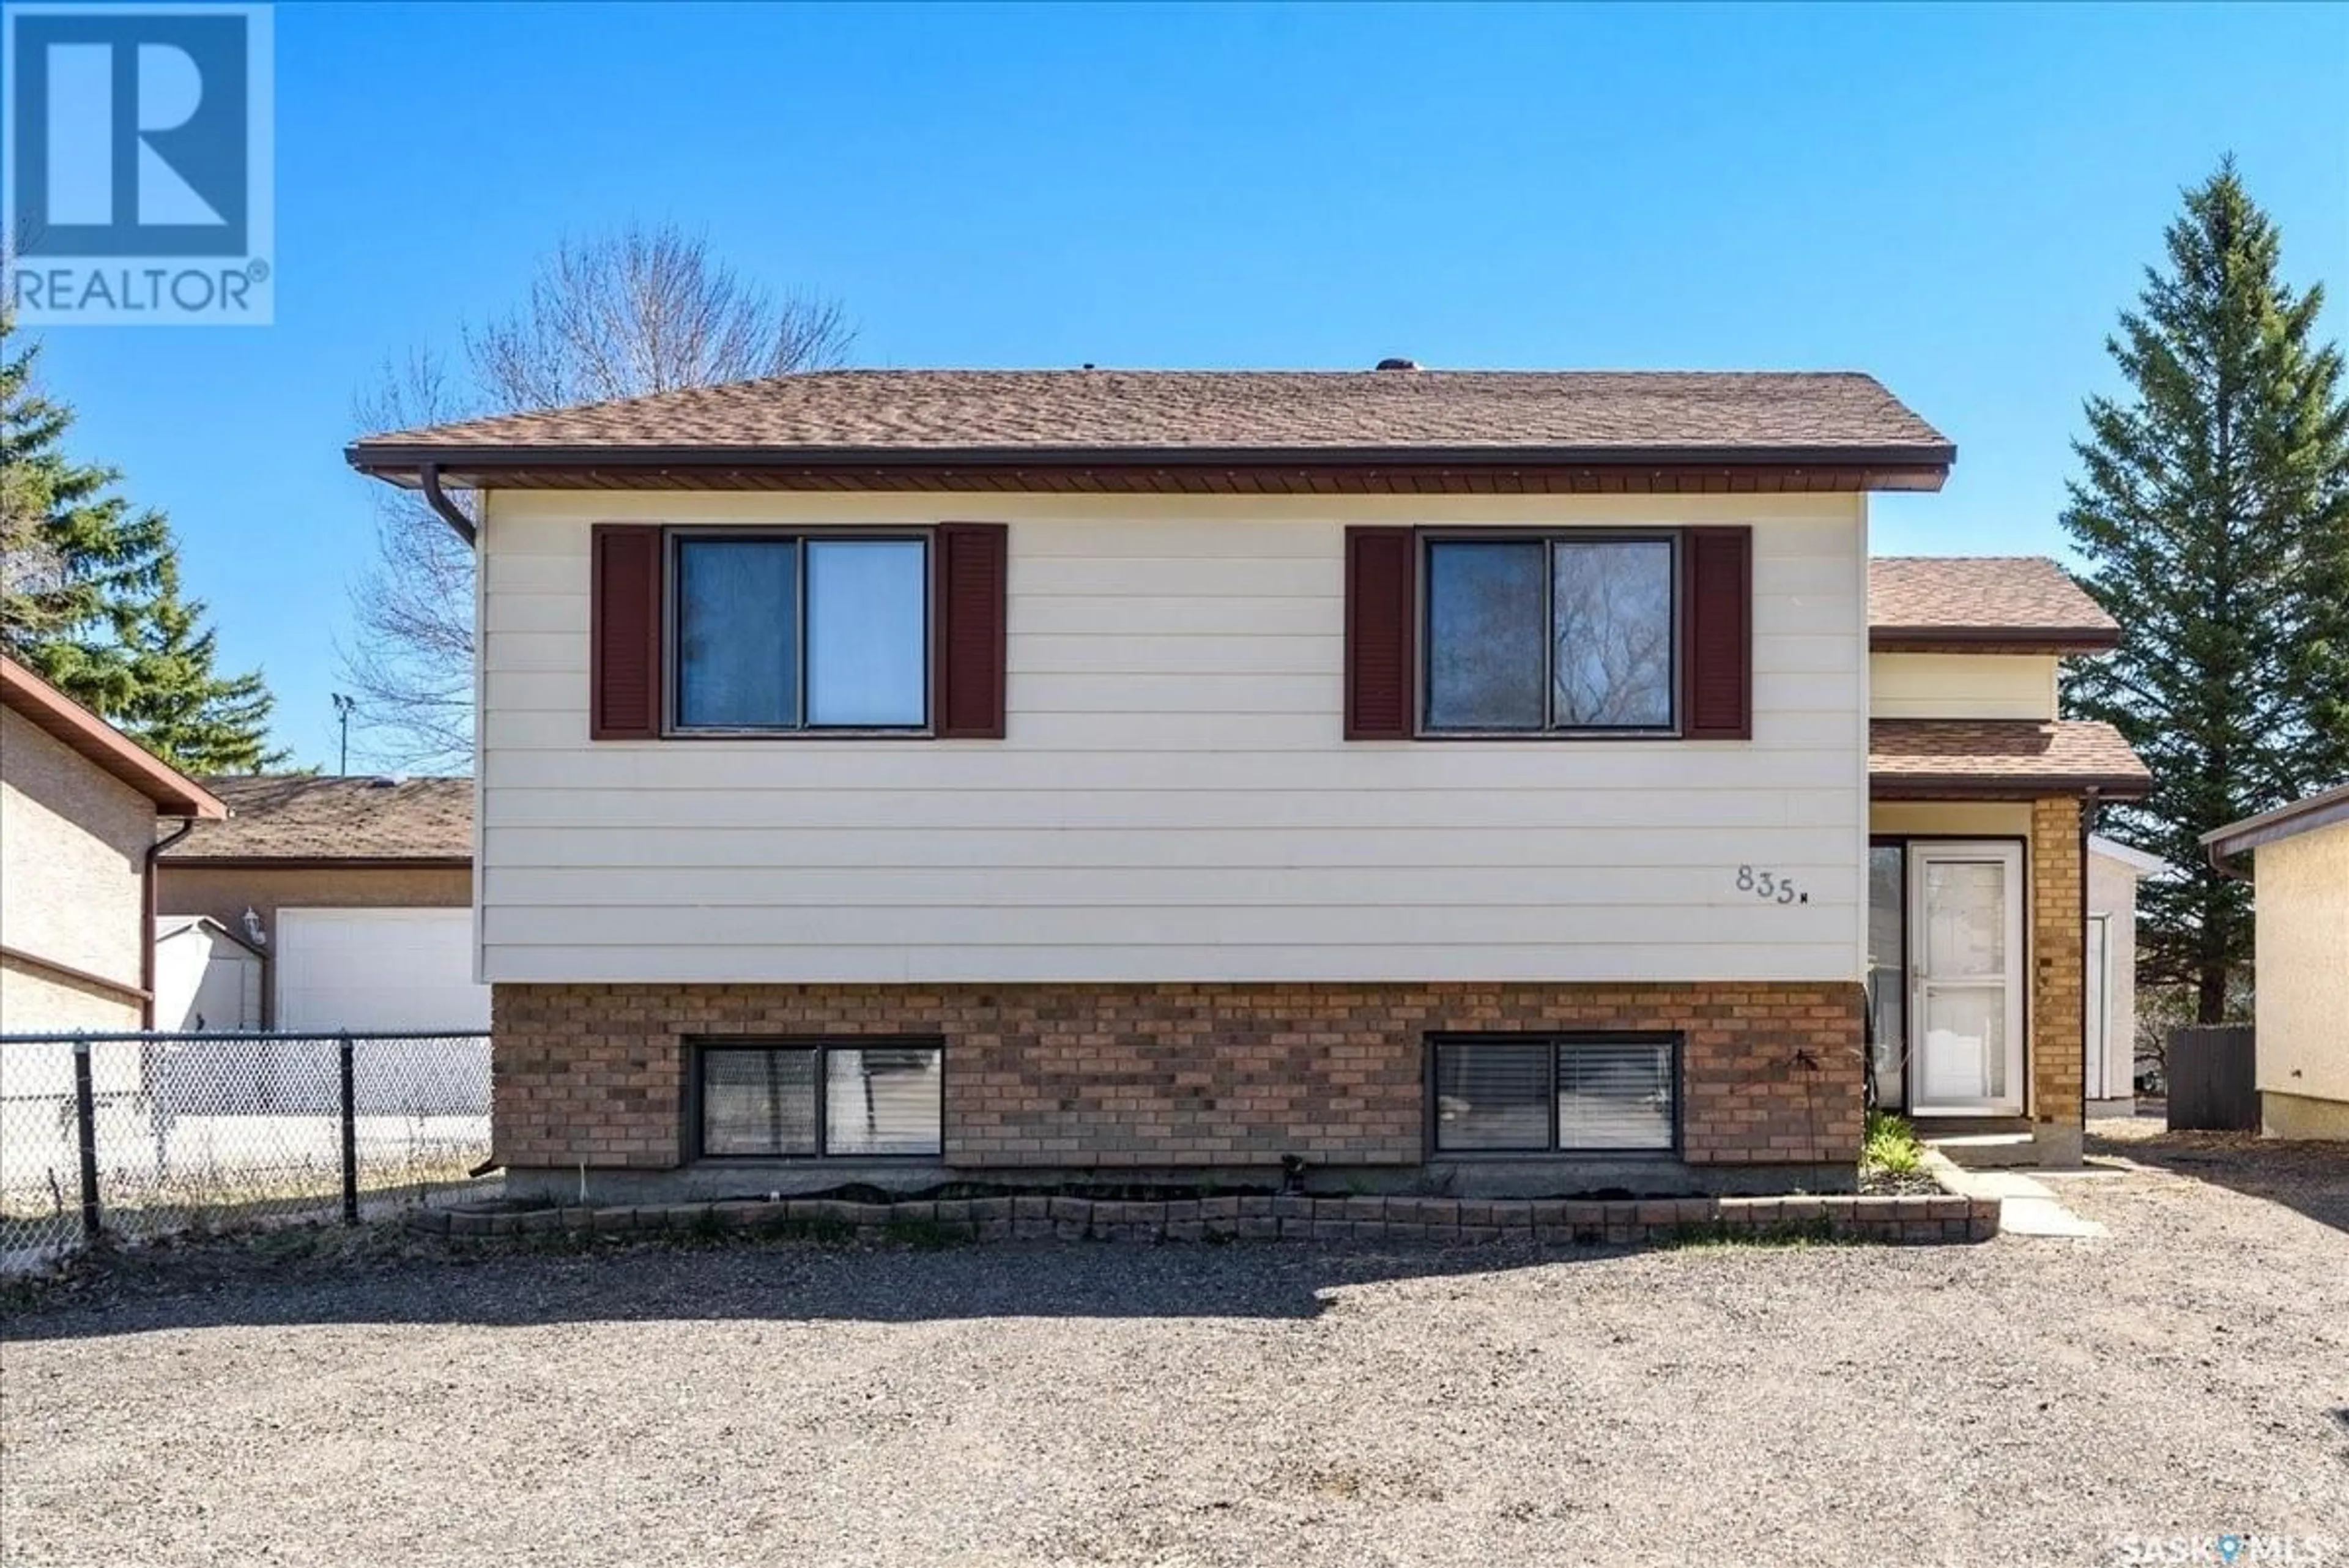 Home with vinyl exterior material for 835 Morris CRESCENT, Regina Saskatchewan S4X2L6